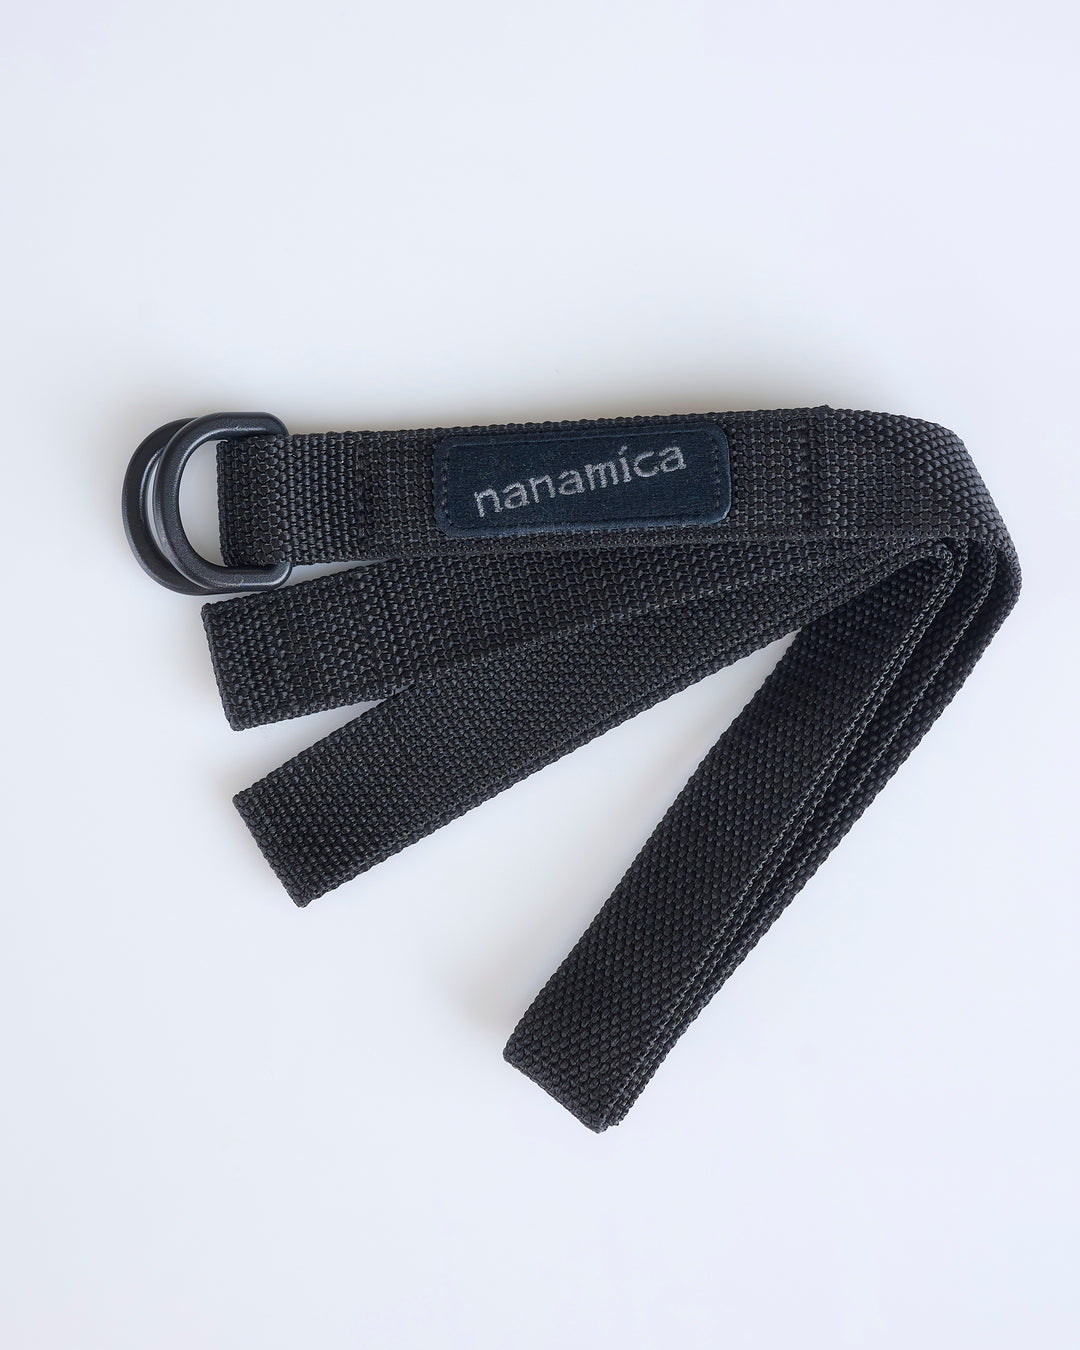 nanamica D-Ring Webbing Tech Belt Black